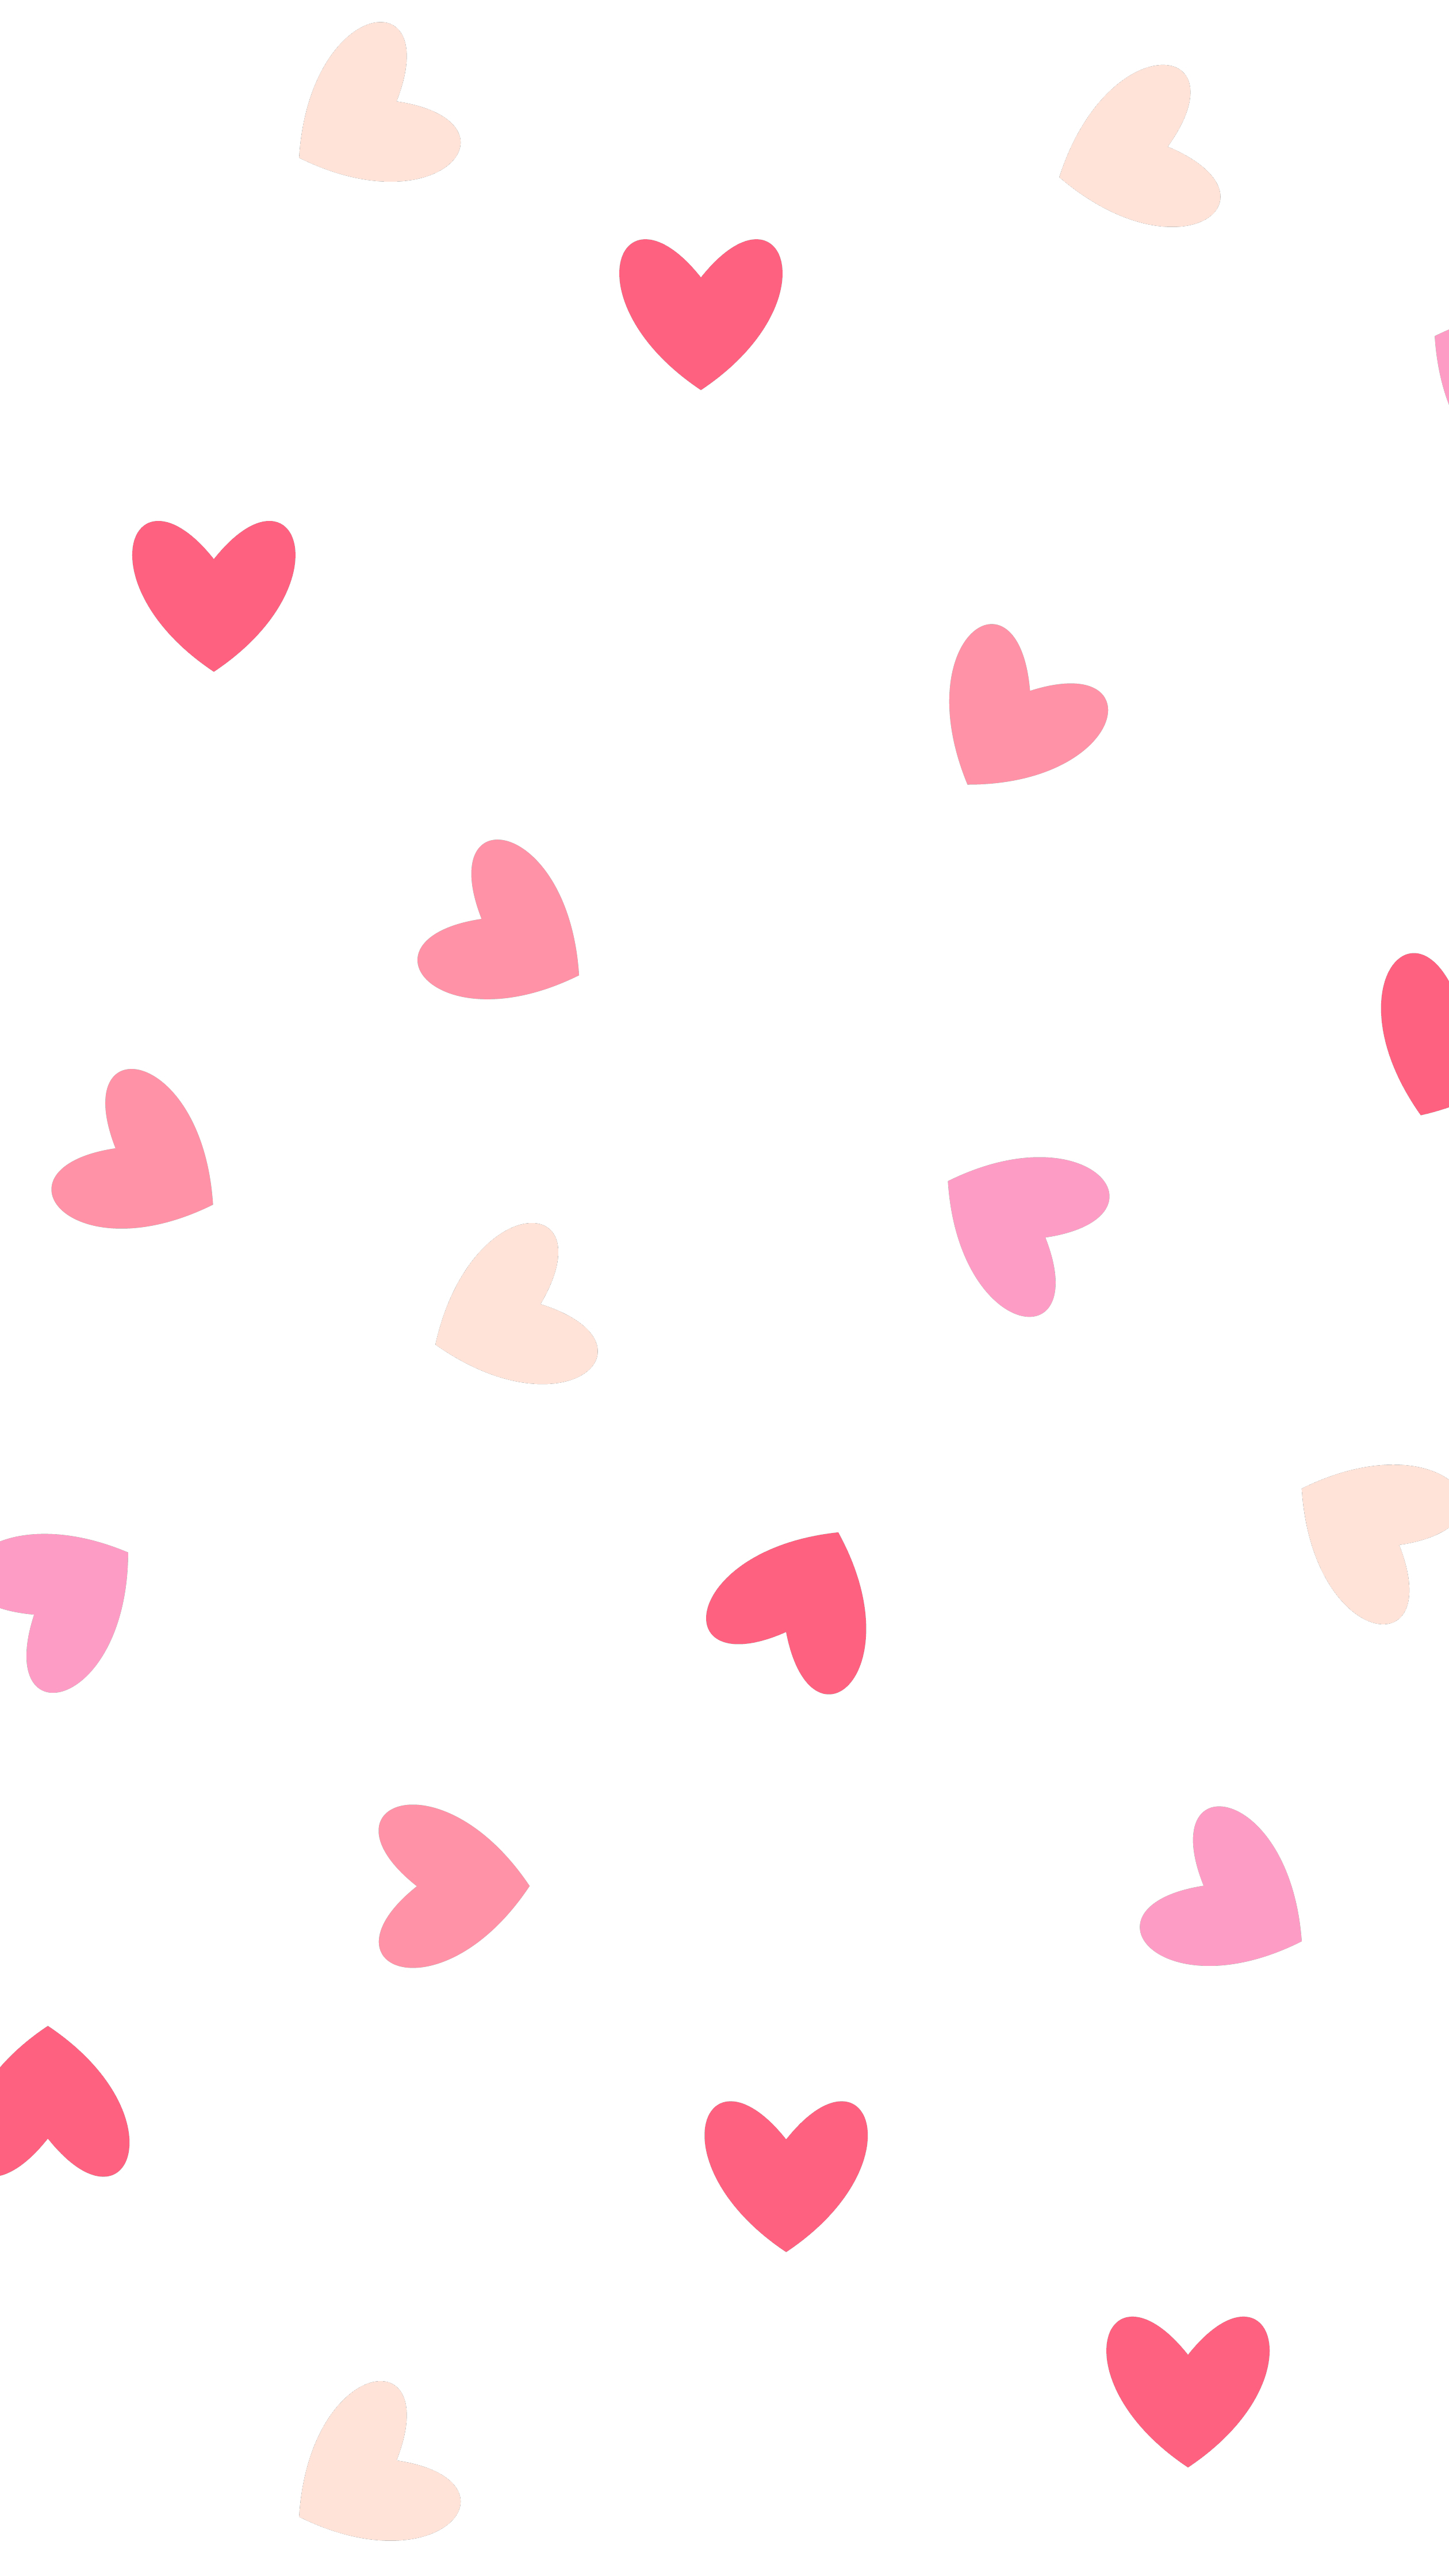 Valentines day heart wallpaper â gathering beauty